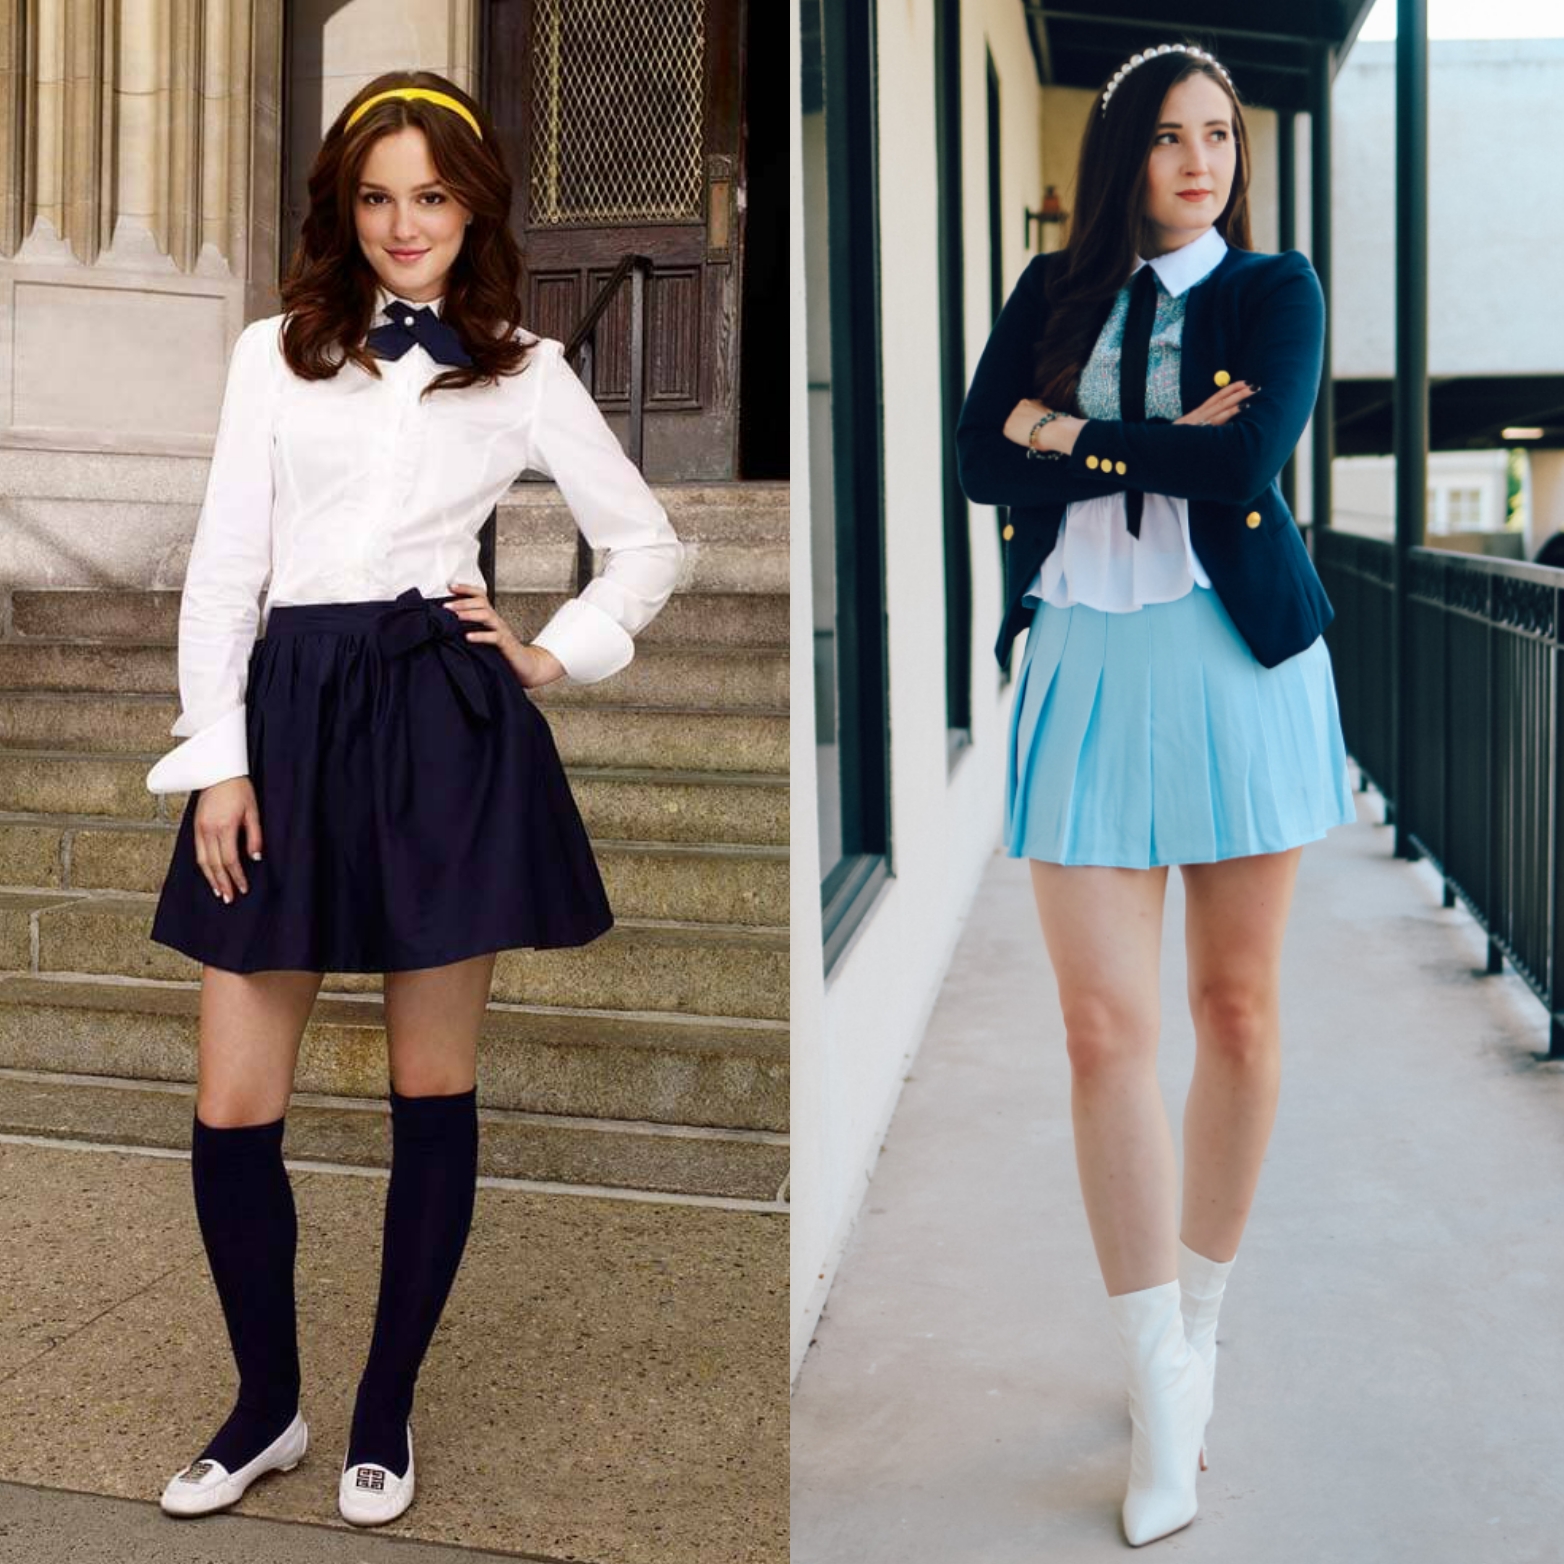 Fall fashion inspired by the original Gossip Girl